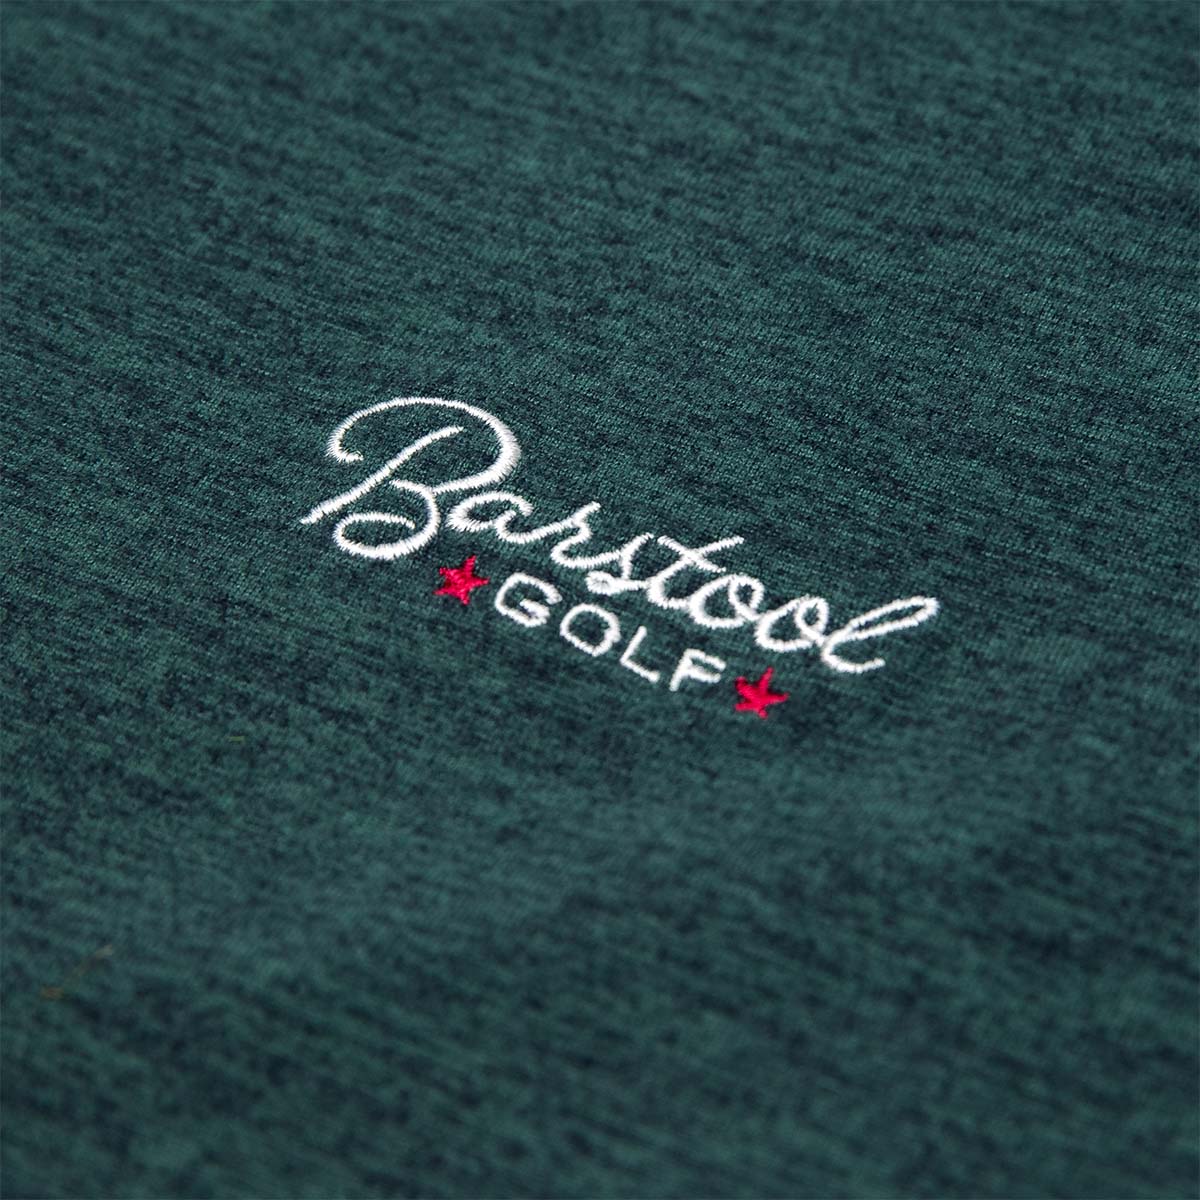 Rhoback x Barstool Golf "The Bear Crawl" Performance Hoodie-Hoodies & Sweatshirts-Fore Play-Barstool Sports